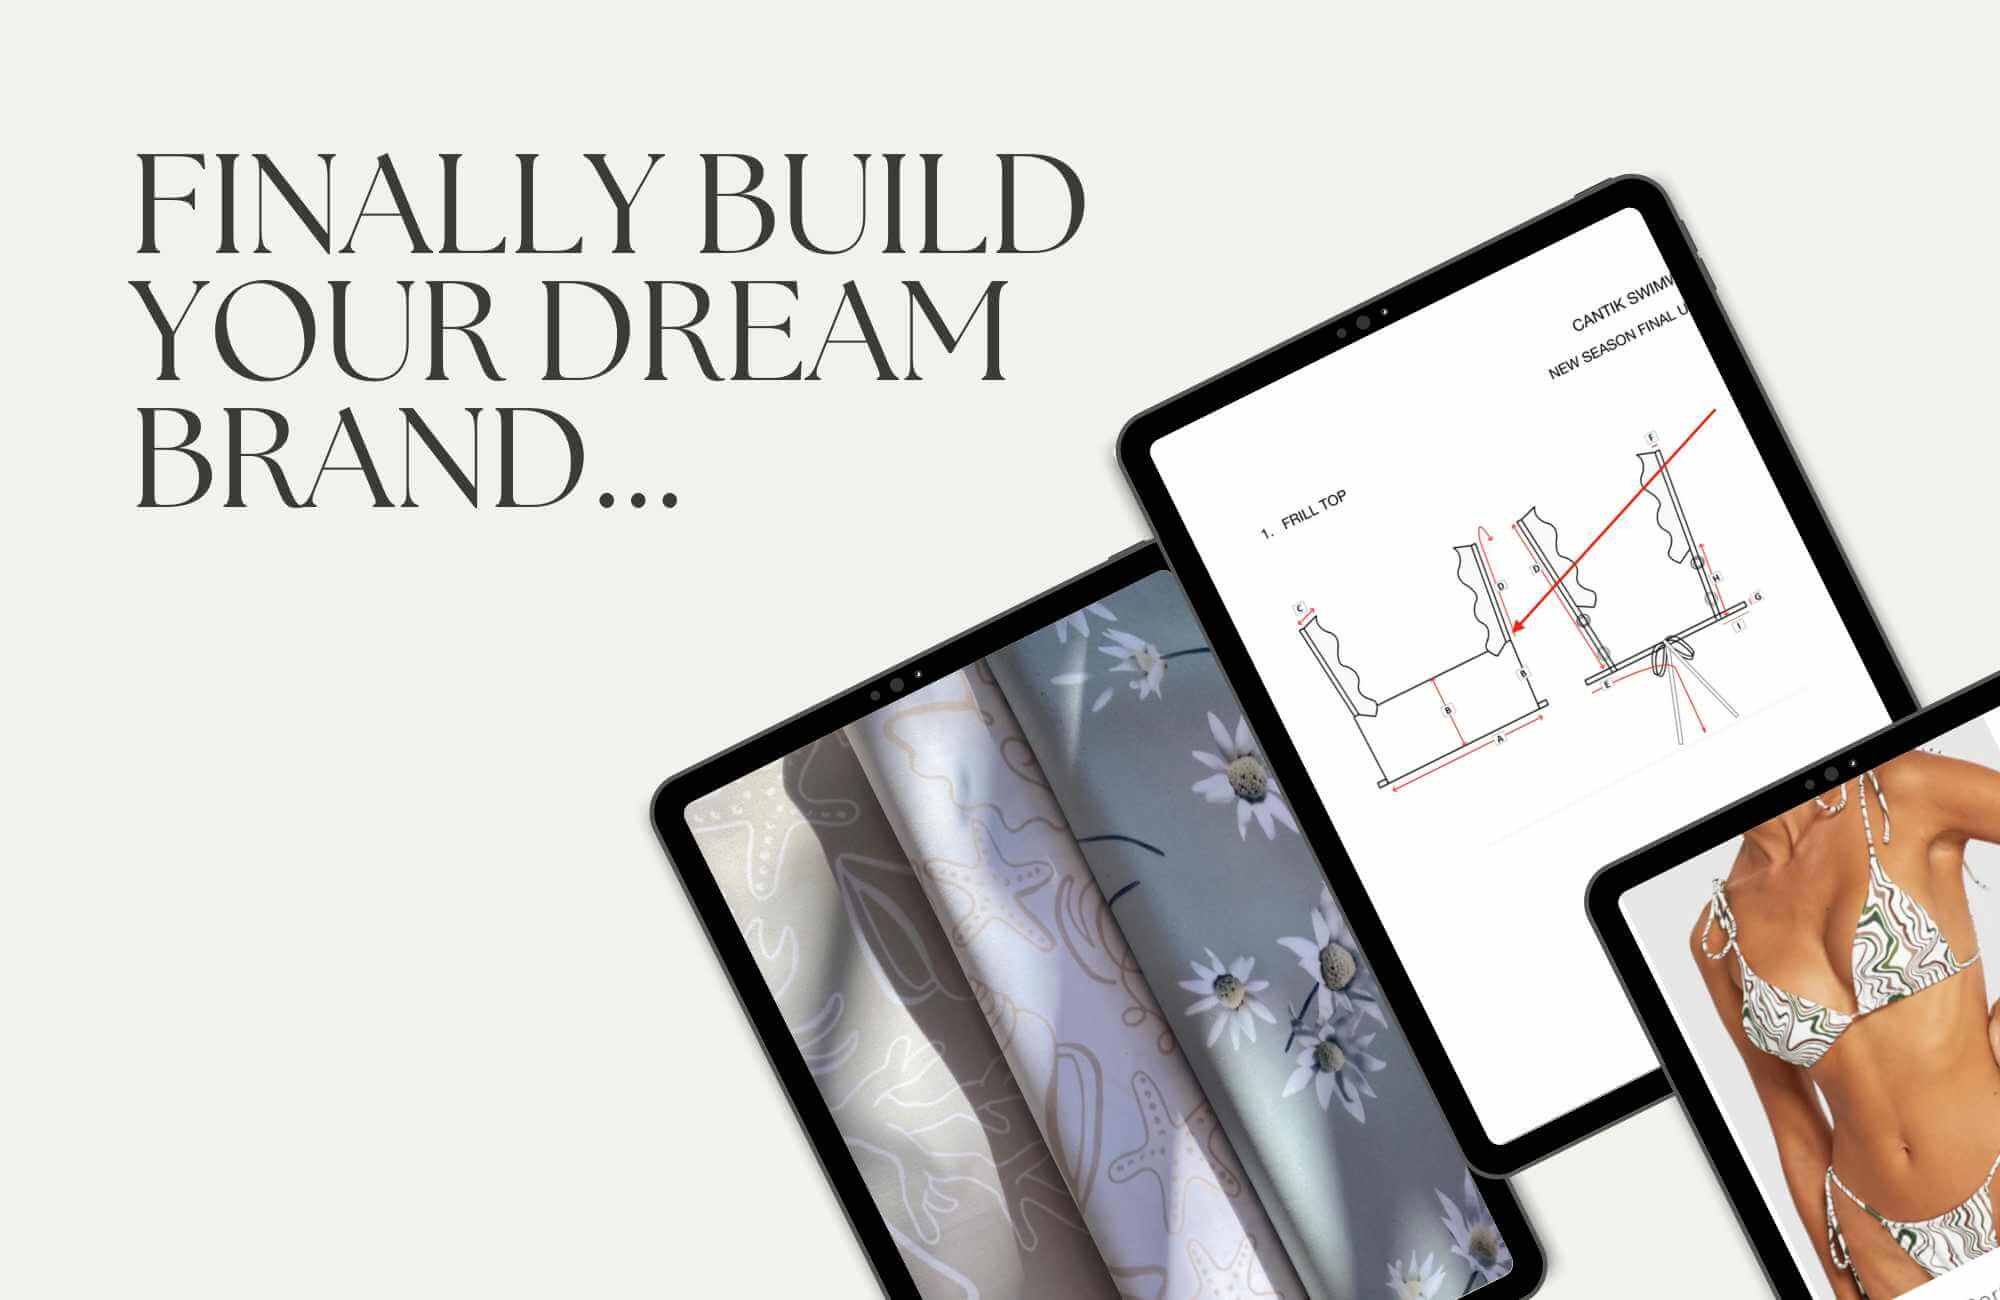 Finally build your dream brand